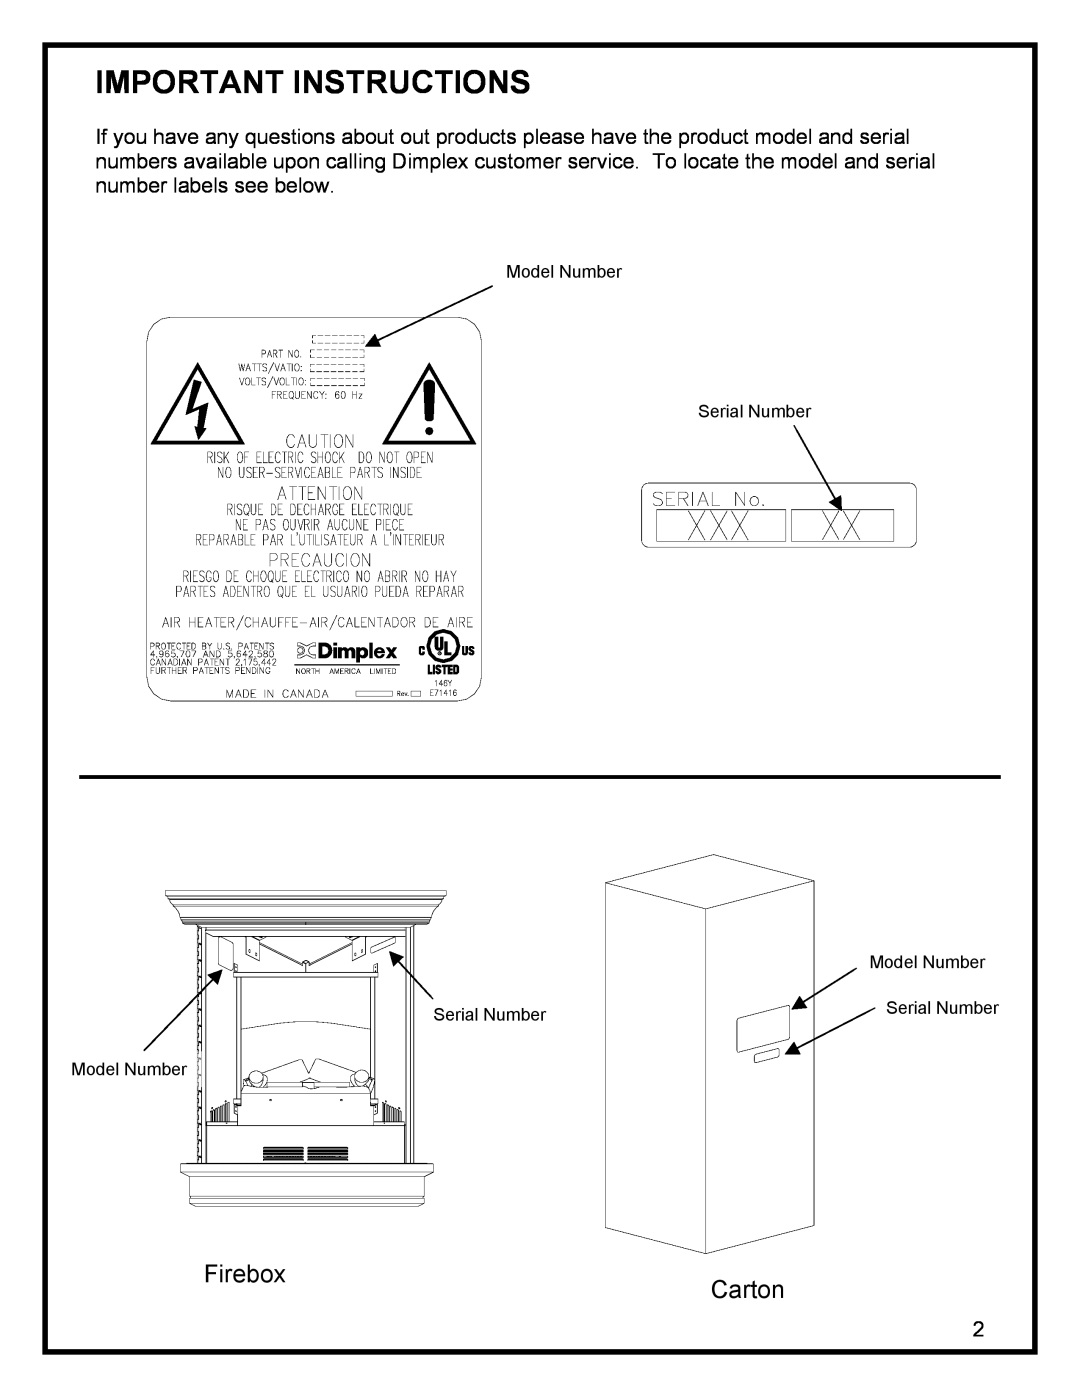 Dimplex EWMC-CC-SS manual Important Instructions, Firebox, Carton, Model Number Serial Number 